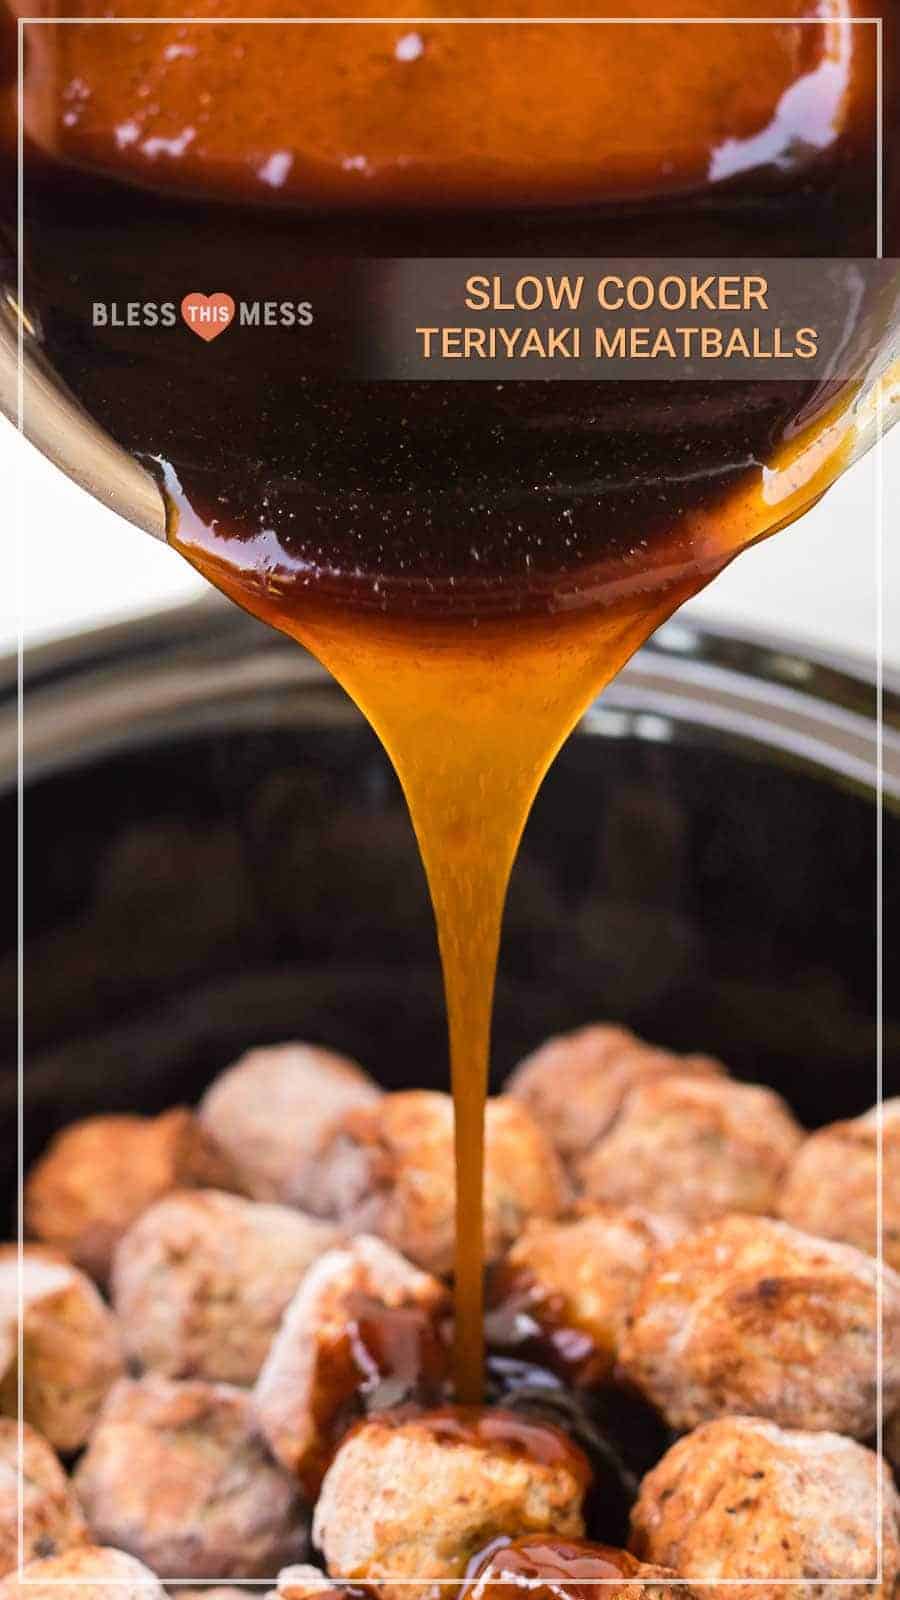 honey teriyaki sauce being poured over meatballs in a black crockpot.